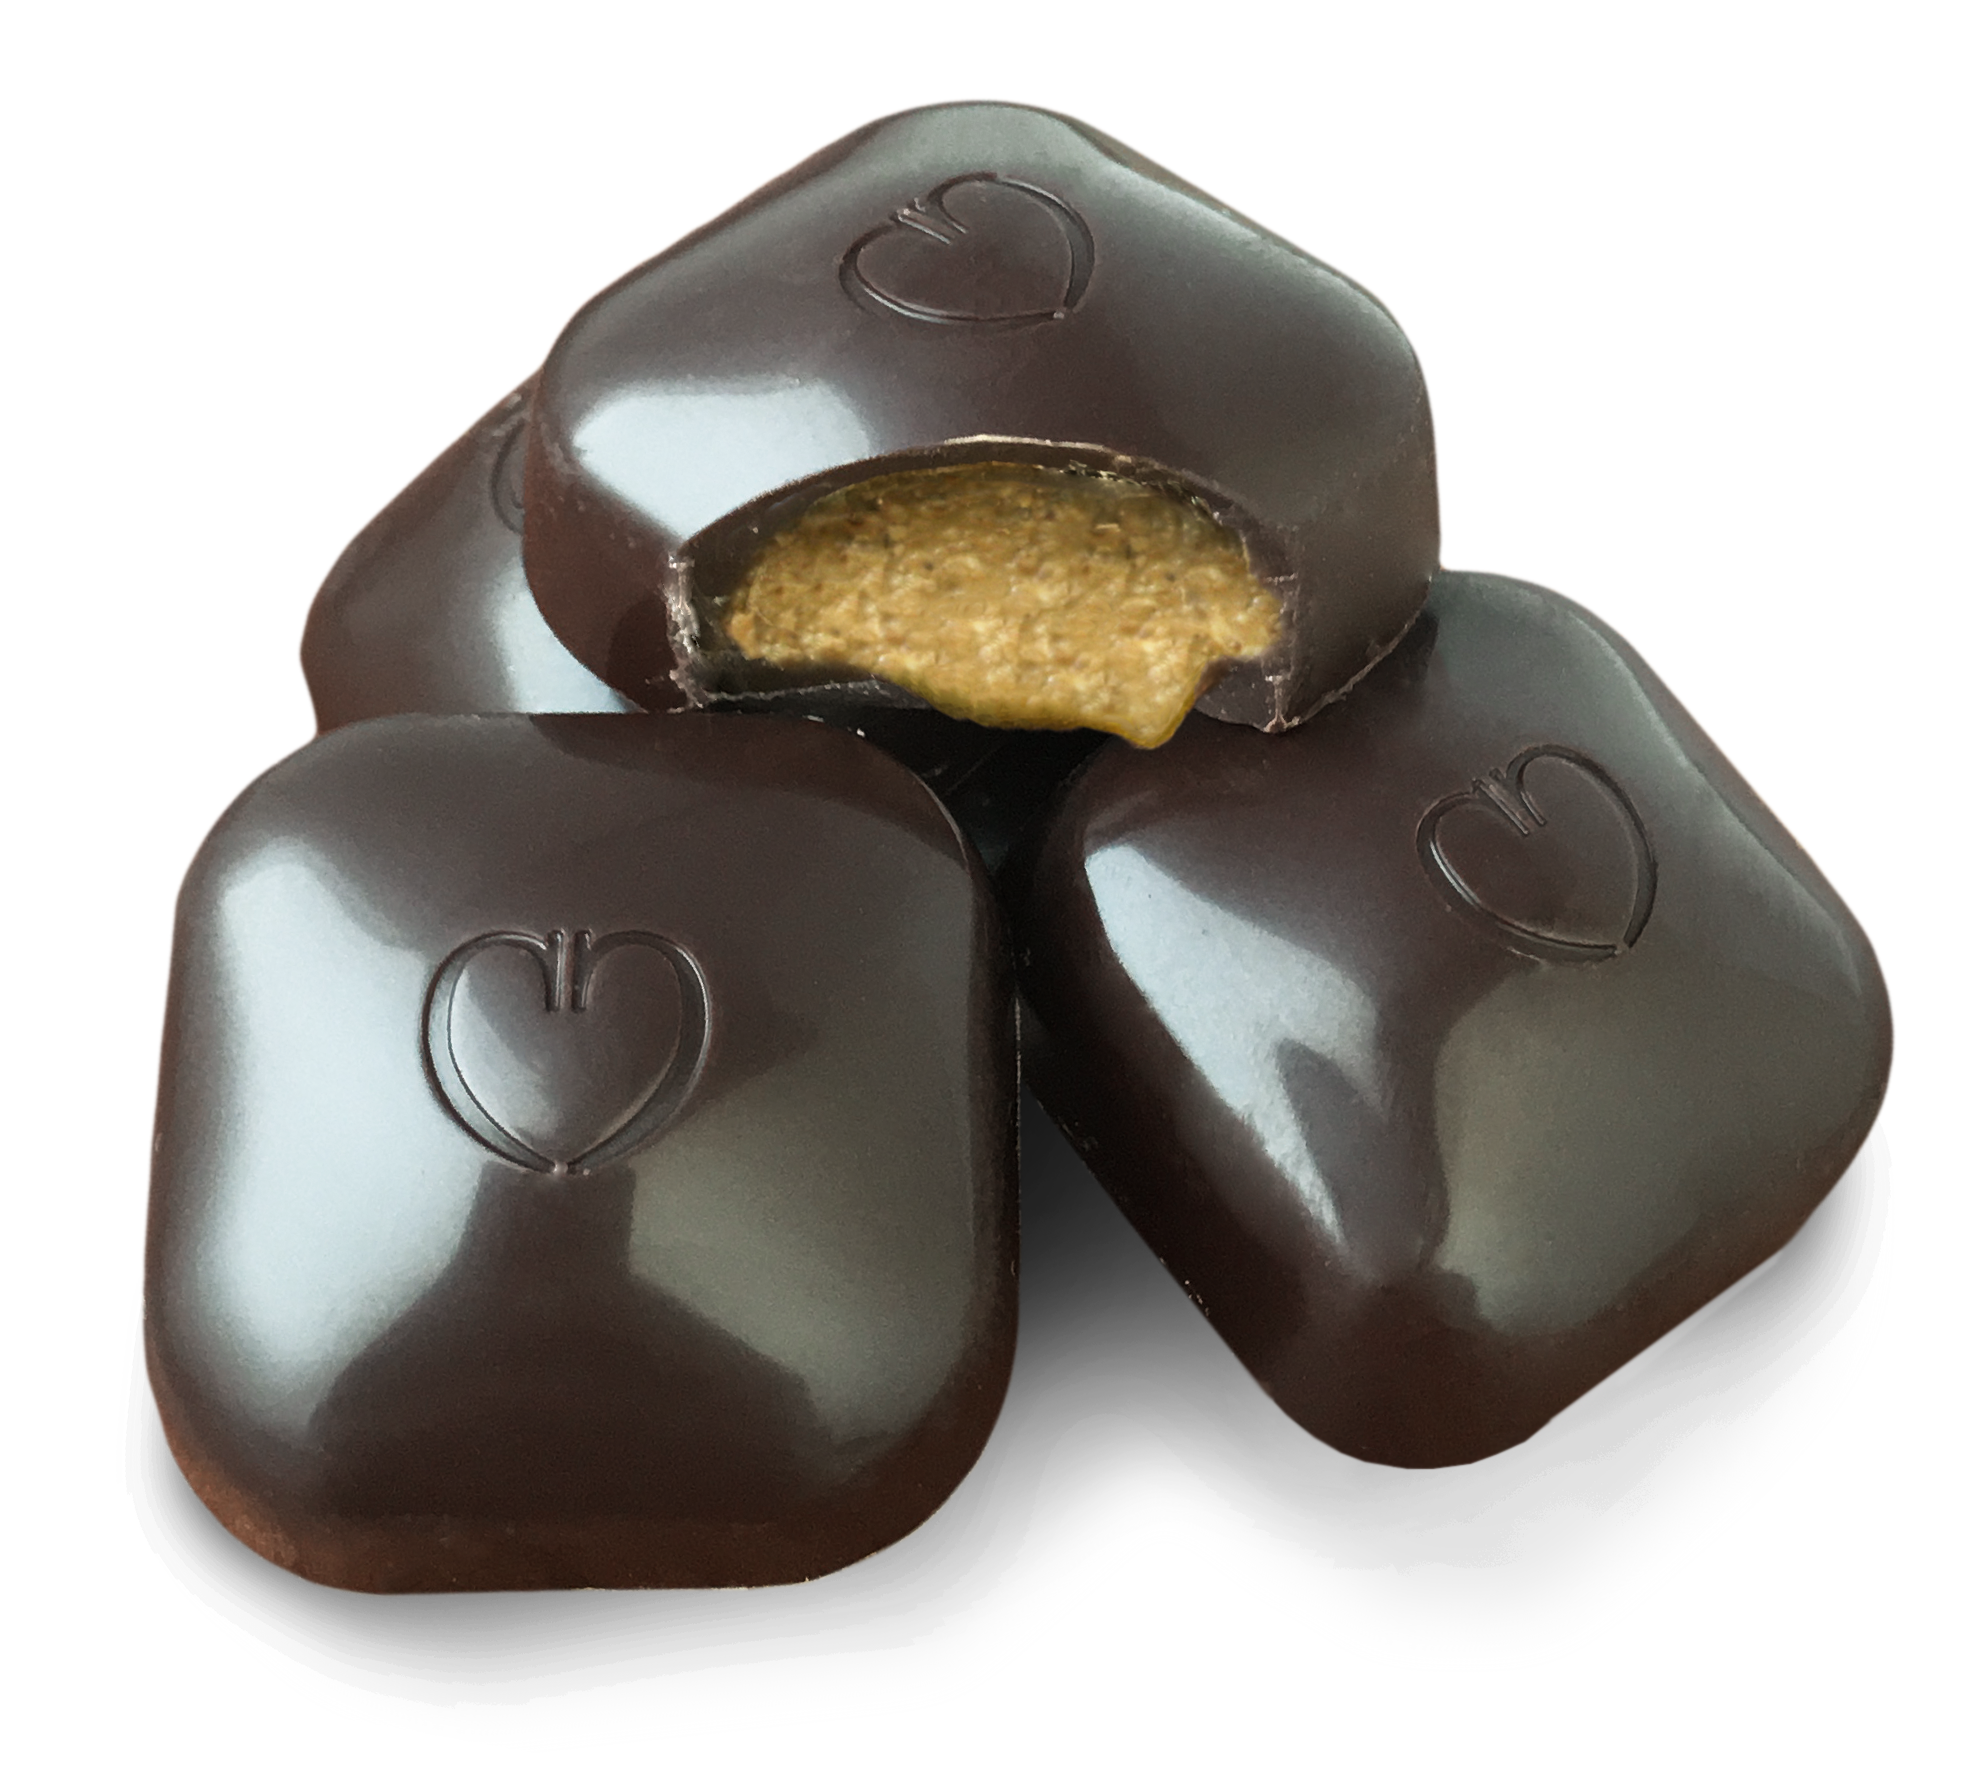 Salted Caramel Cups Dark Chocolate (50-Count Change Maker) - Chocolove -  Premium Chocolate